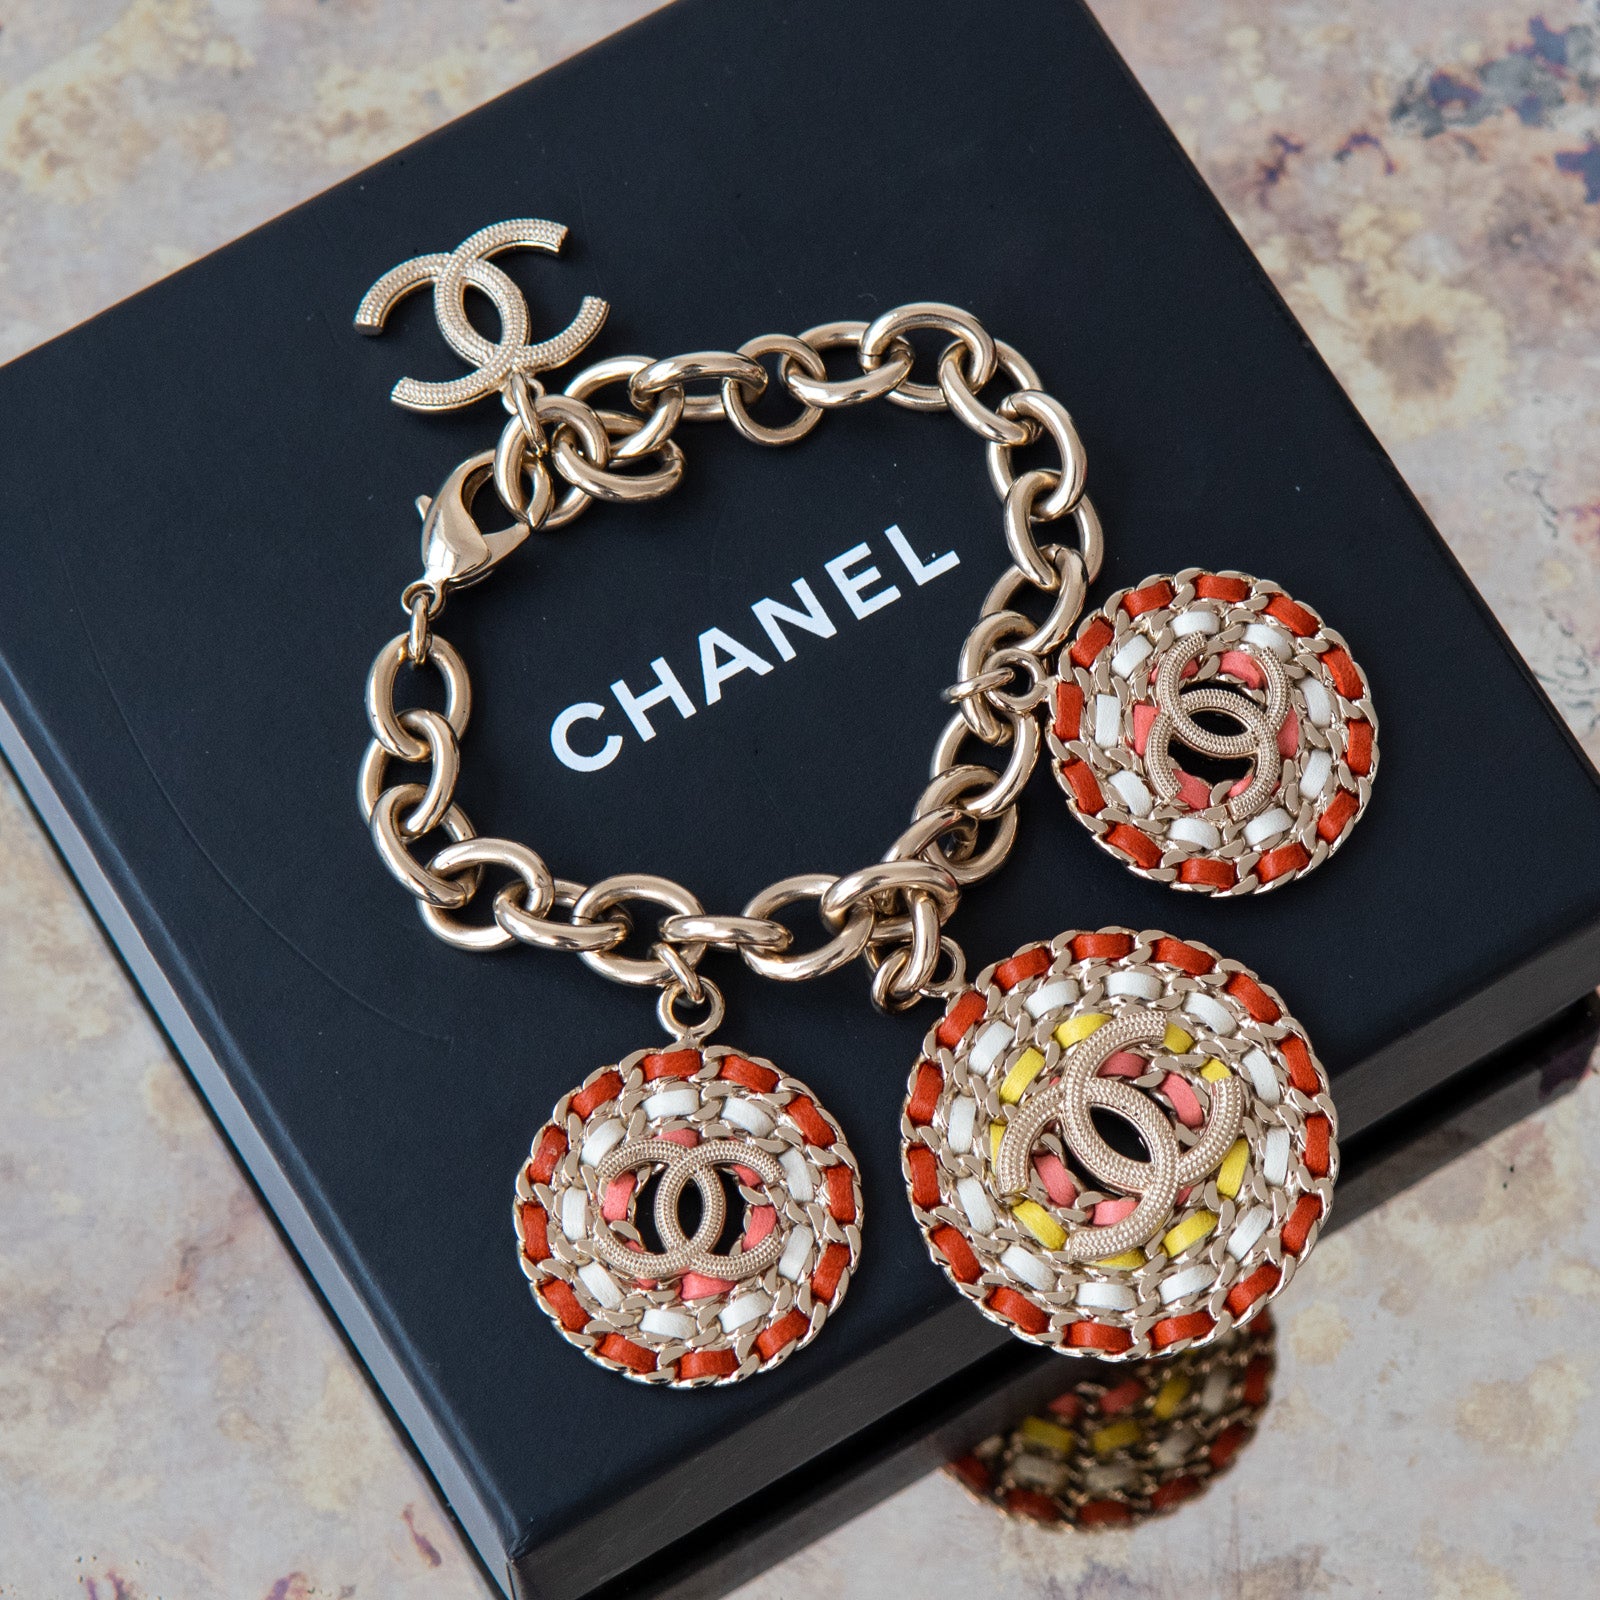 Chanel Medallion Bracelet - Image 2 of 4